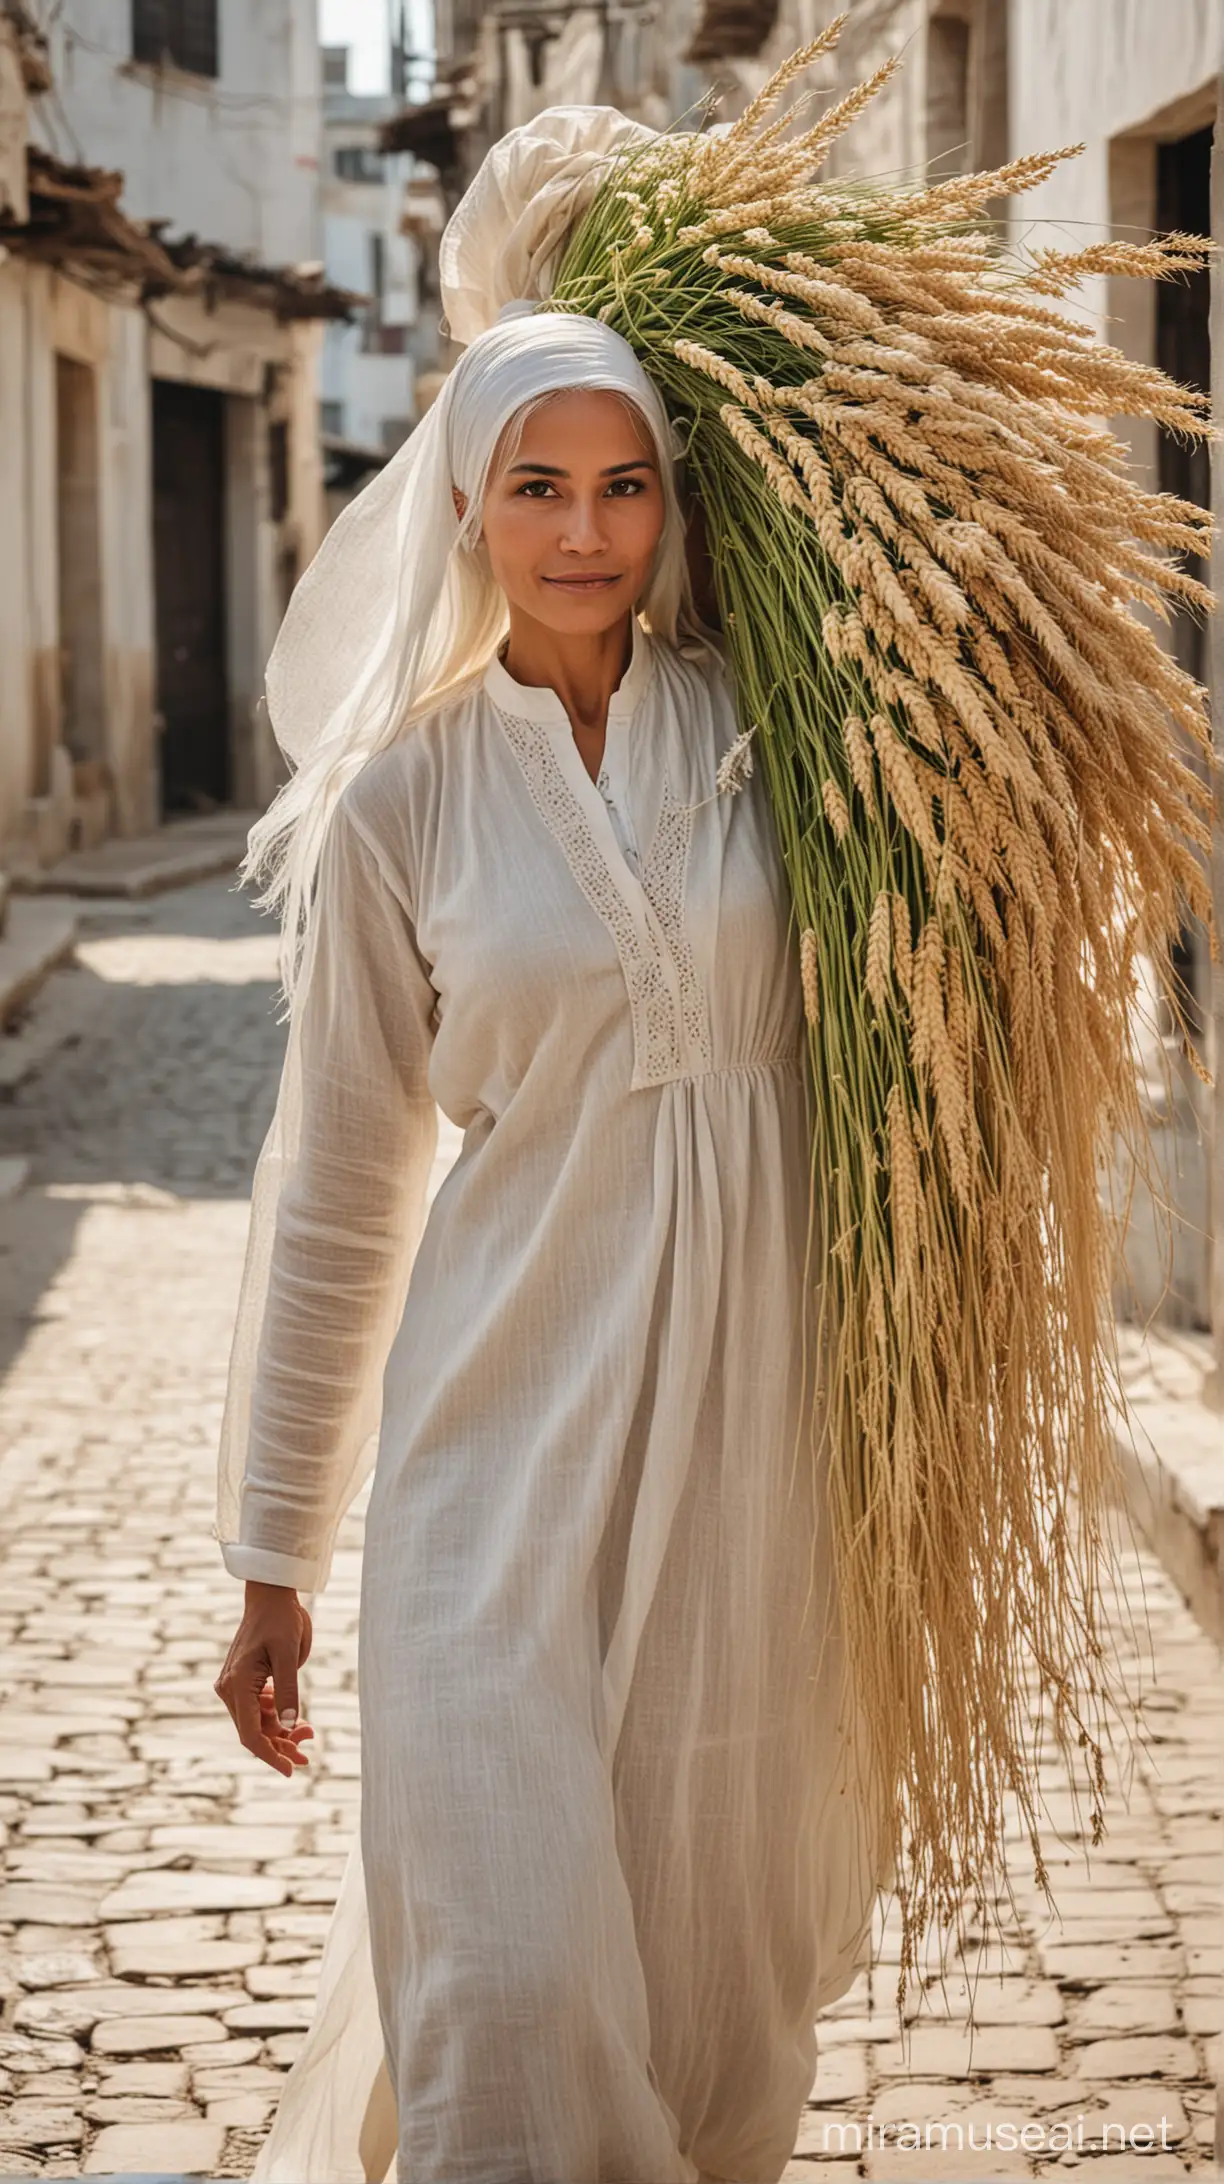 seorang perempuan ethnis jawa rambut panjang warna putih sedang membawa bunga gandum sangat banyak hingga menutupi wajahnya, ia sedang berada di kota tunisia dengan memakai baju dress berbahan linen.